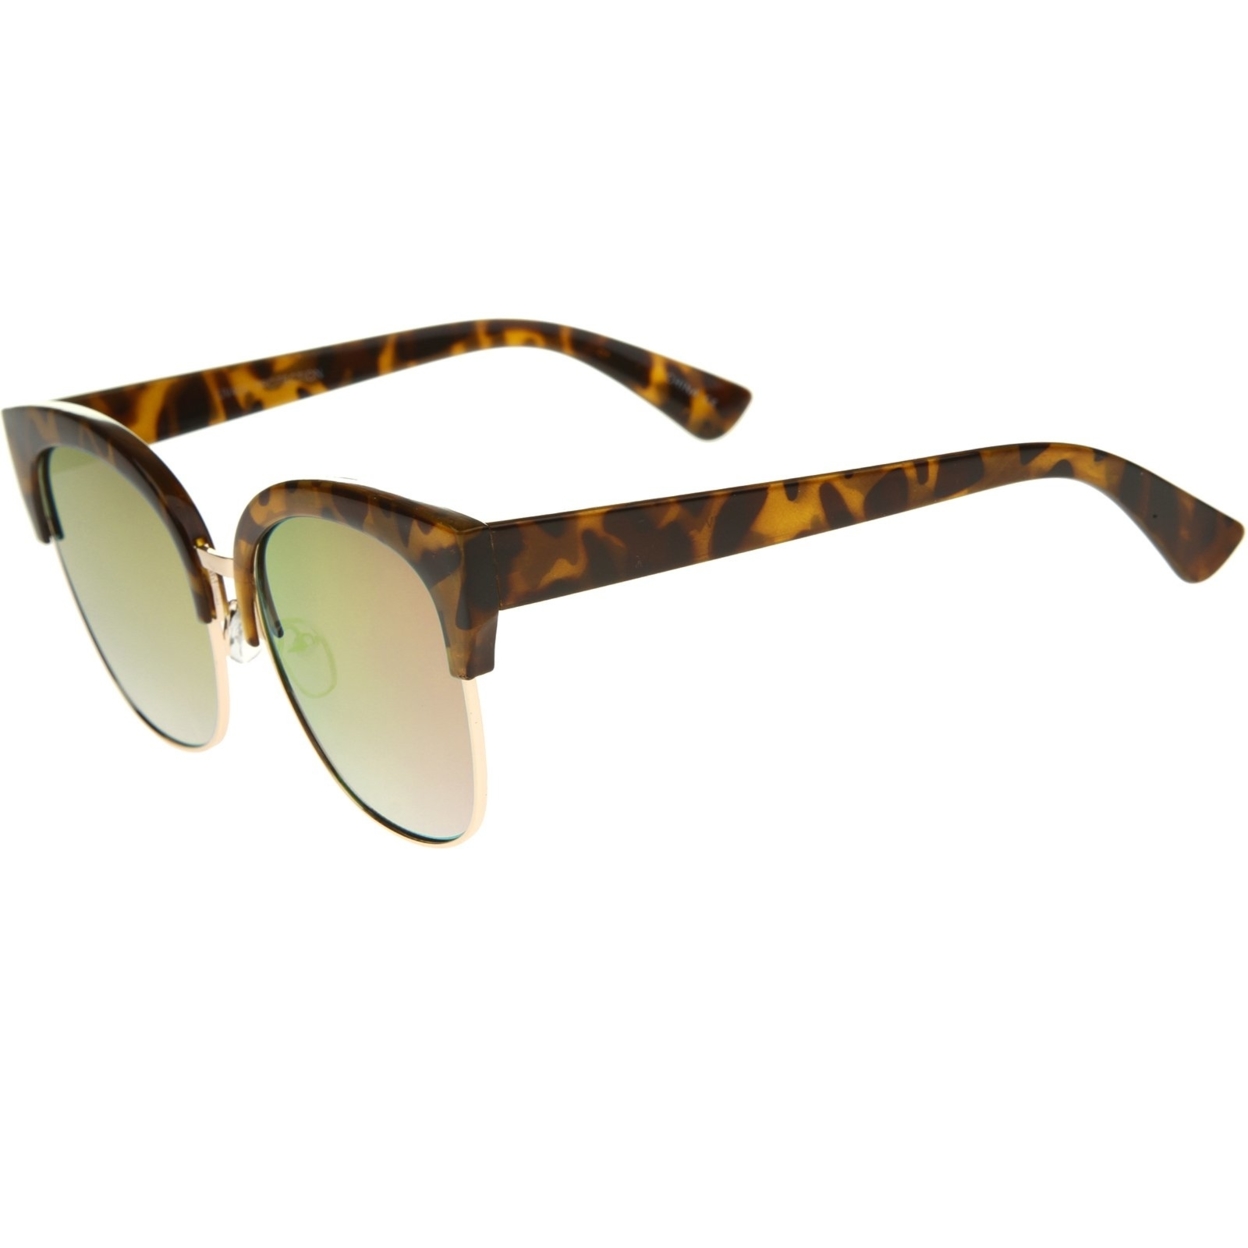 Modern Oversized Half-Frame Color Mirror Flat Lens Cat Eye Sunglasses 58mm - Black / Blue Mirror